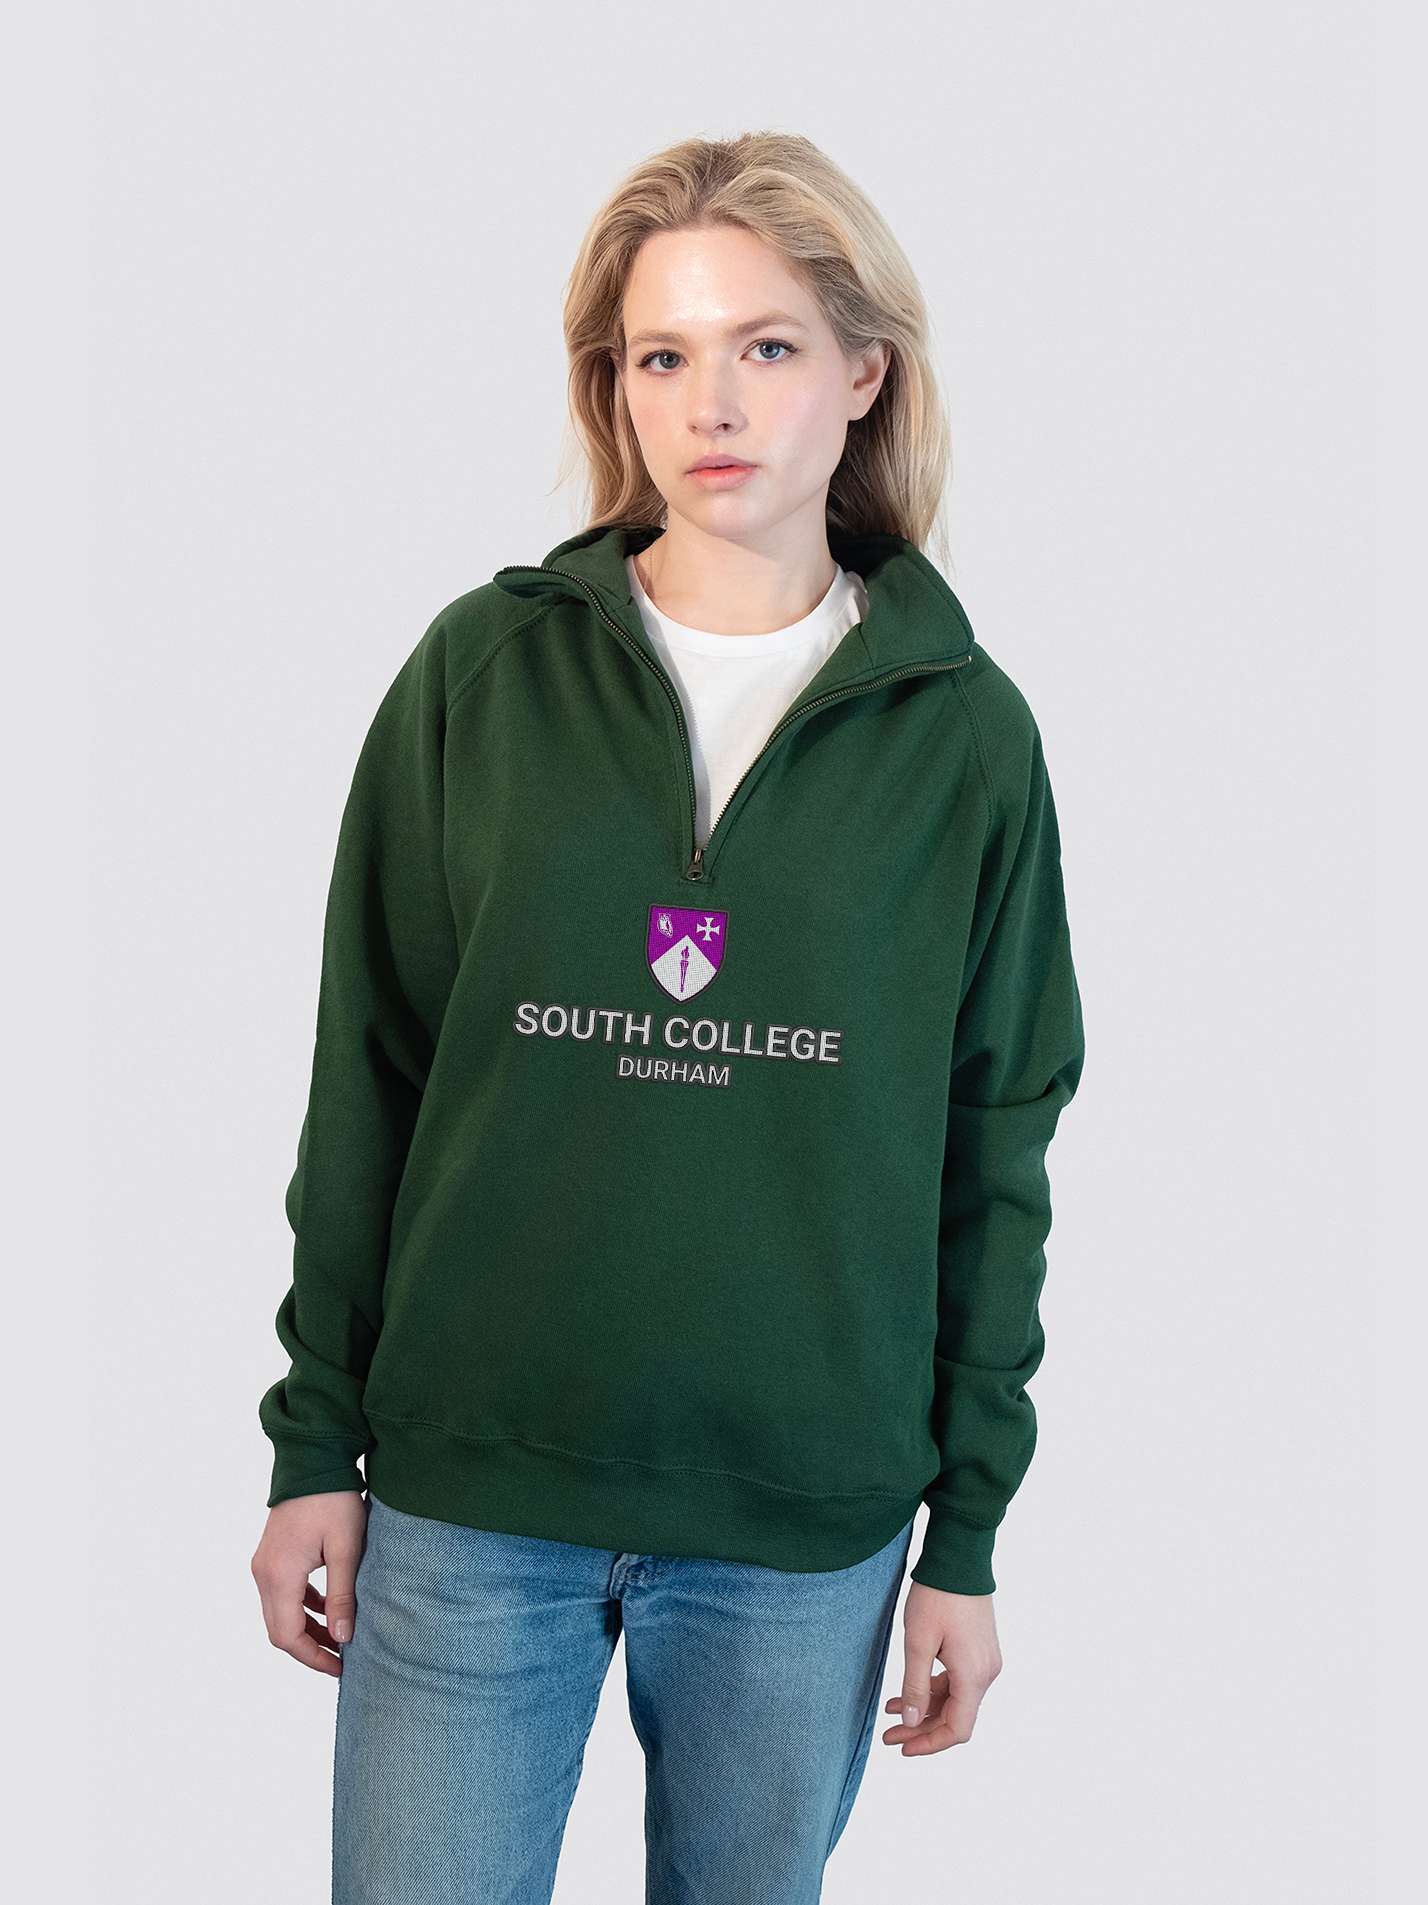 South College Durham Heritage Unisex 1/4 Zip Sweatshirt